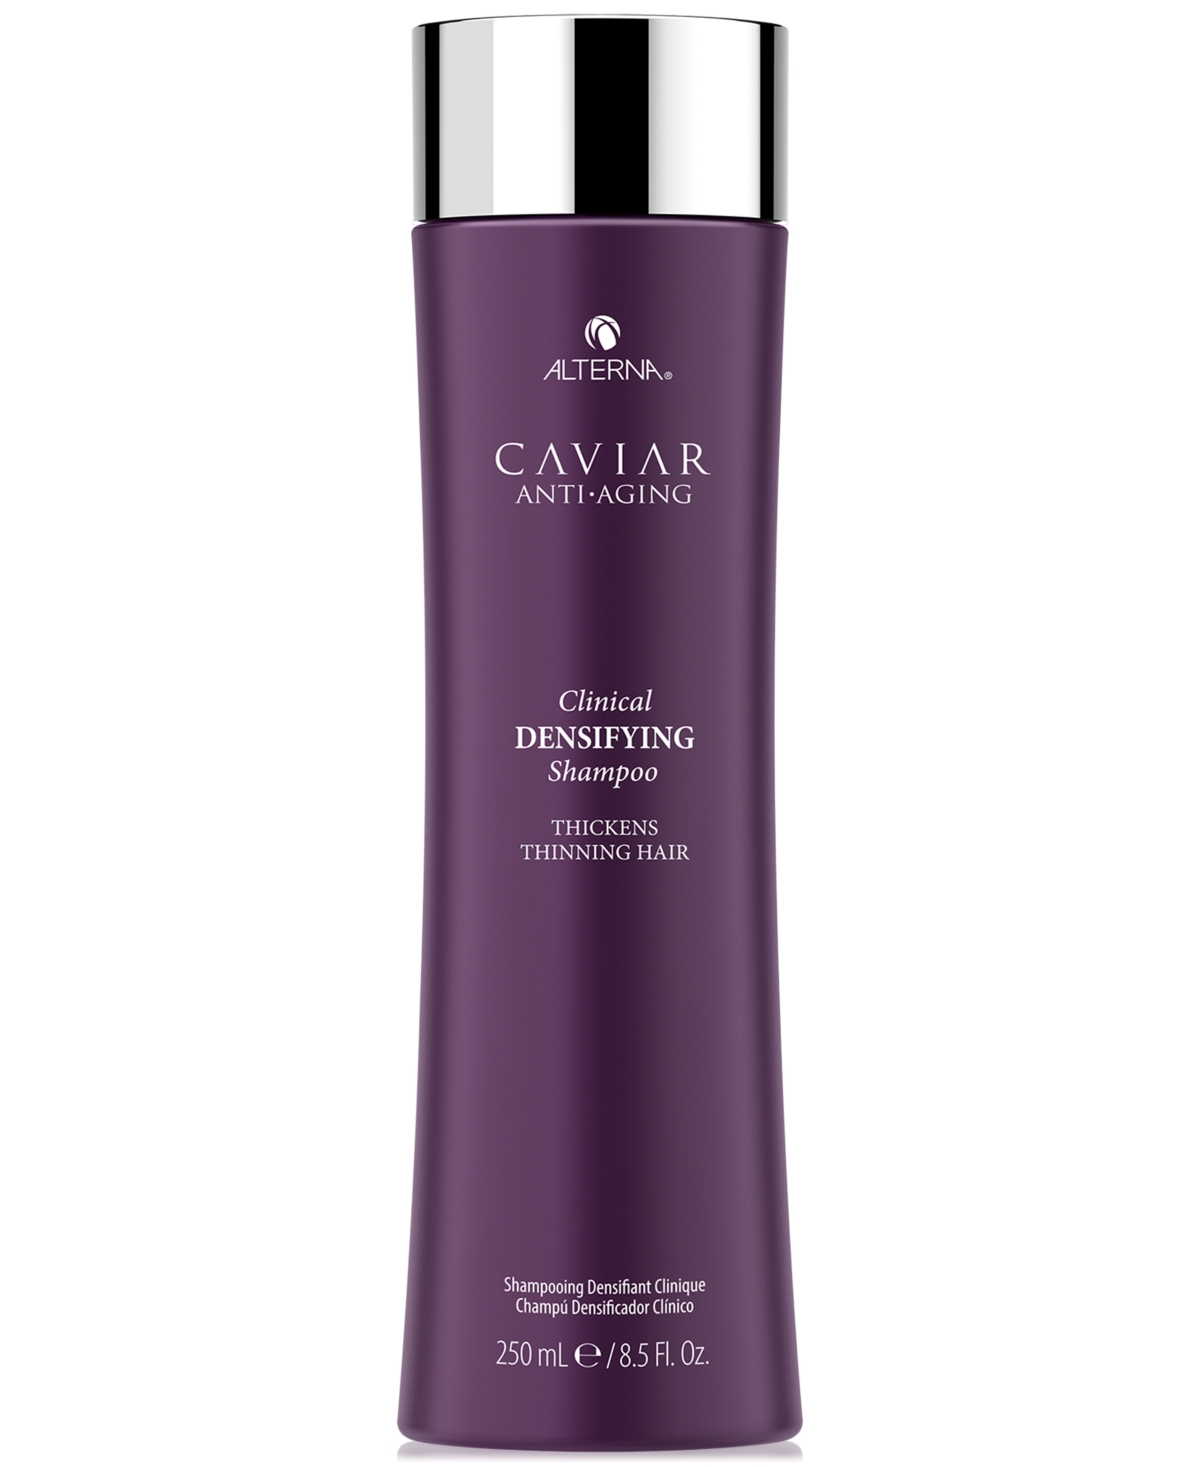 Caviar Anti-Aging Clinical Densifying Shampoo, 8.5-oz.